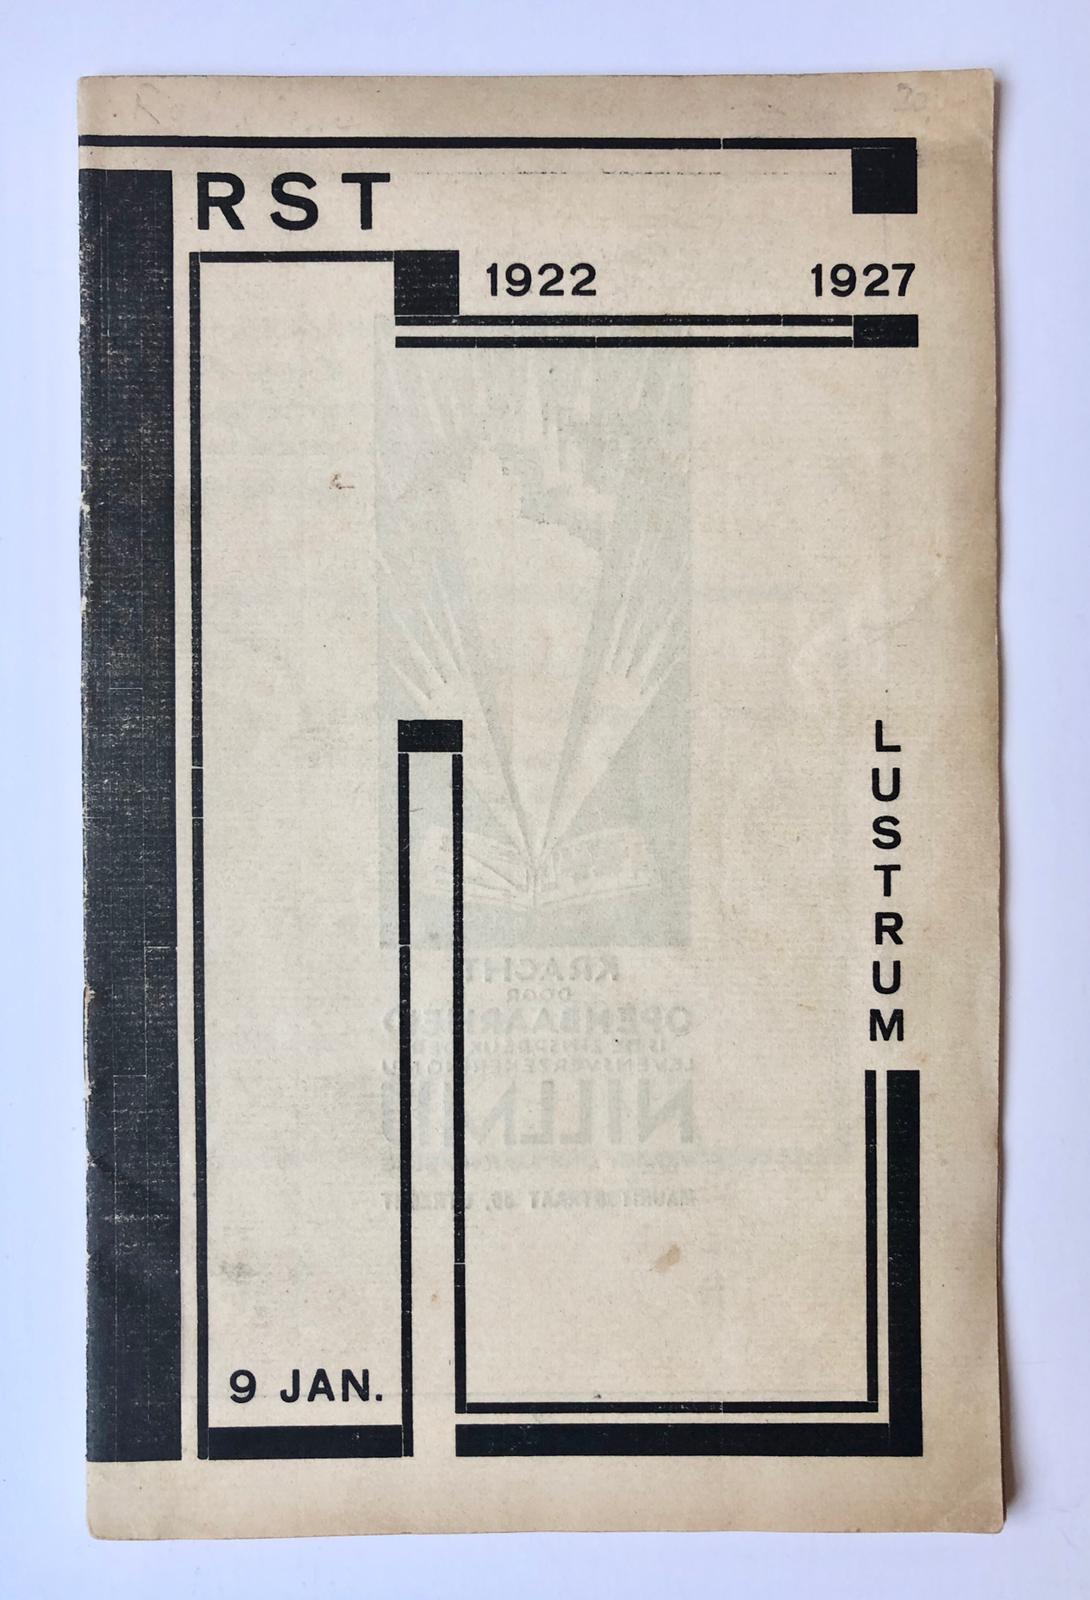 [Rotterdam, Students, 1927] RST 1922-1927 Lustrum, 9 Jan, Rotterdam, 15 pp.